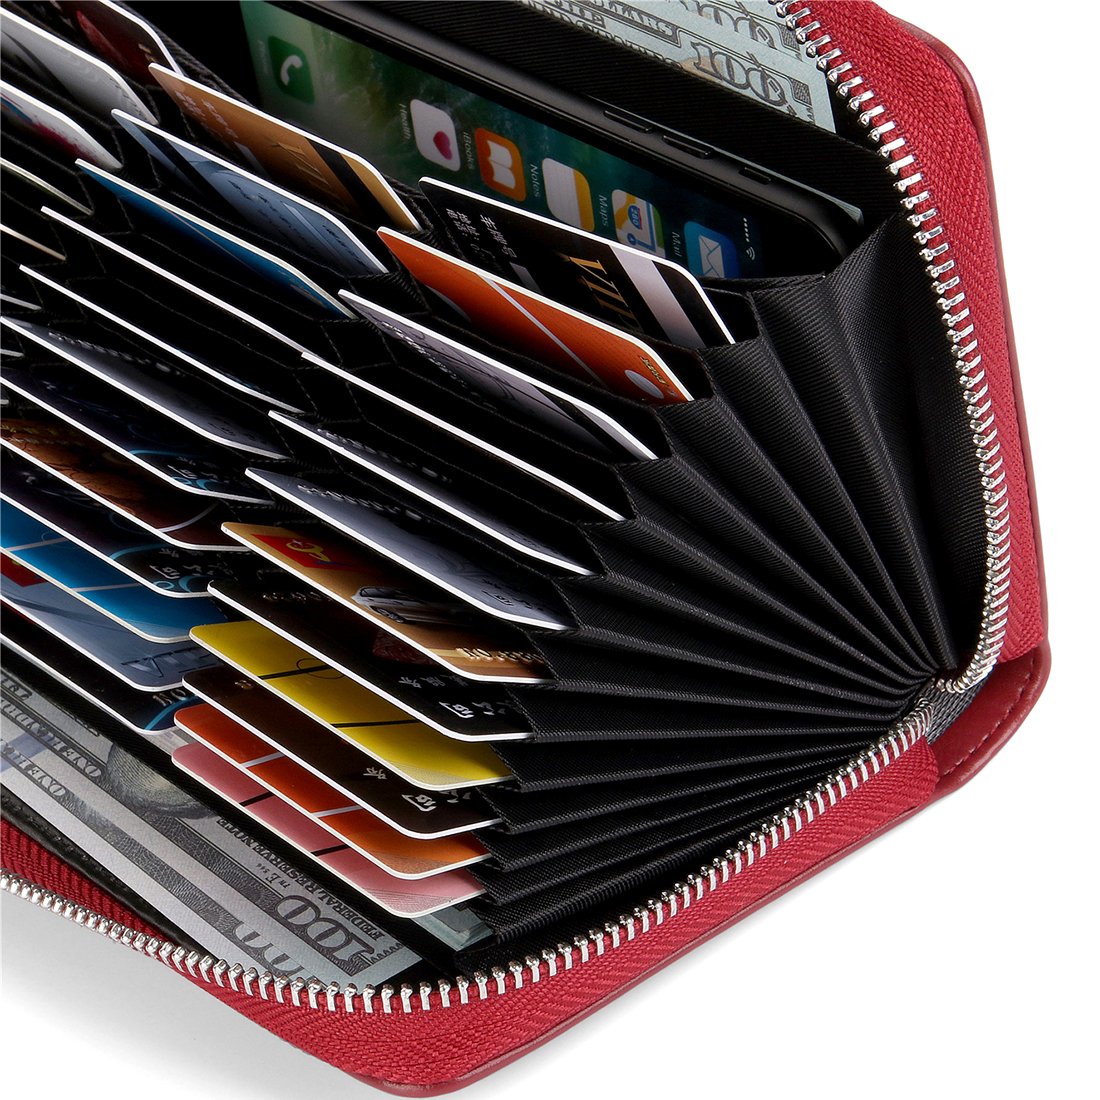 Buvelife Credit Card Wallet Leather RFID Wallet for Women, Huge Storage Capacity